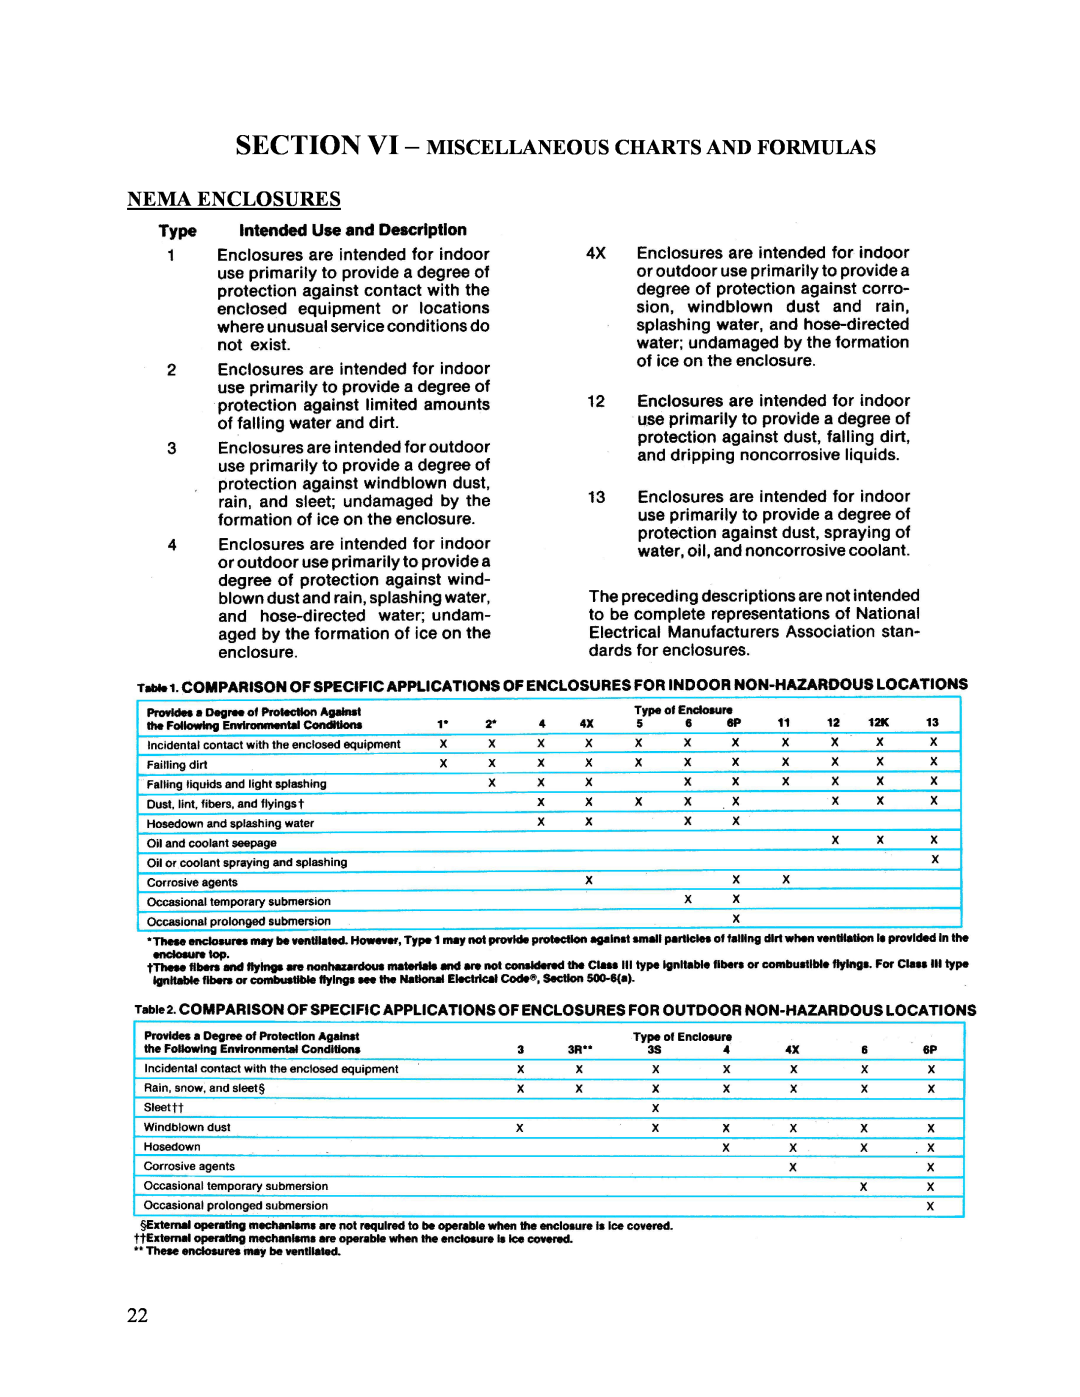 Hubbell CR manual Section Vi - Miscellaneous Charts And Formulas, Nema Enclosures 